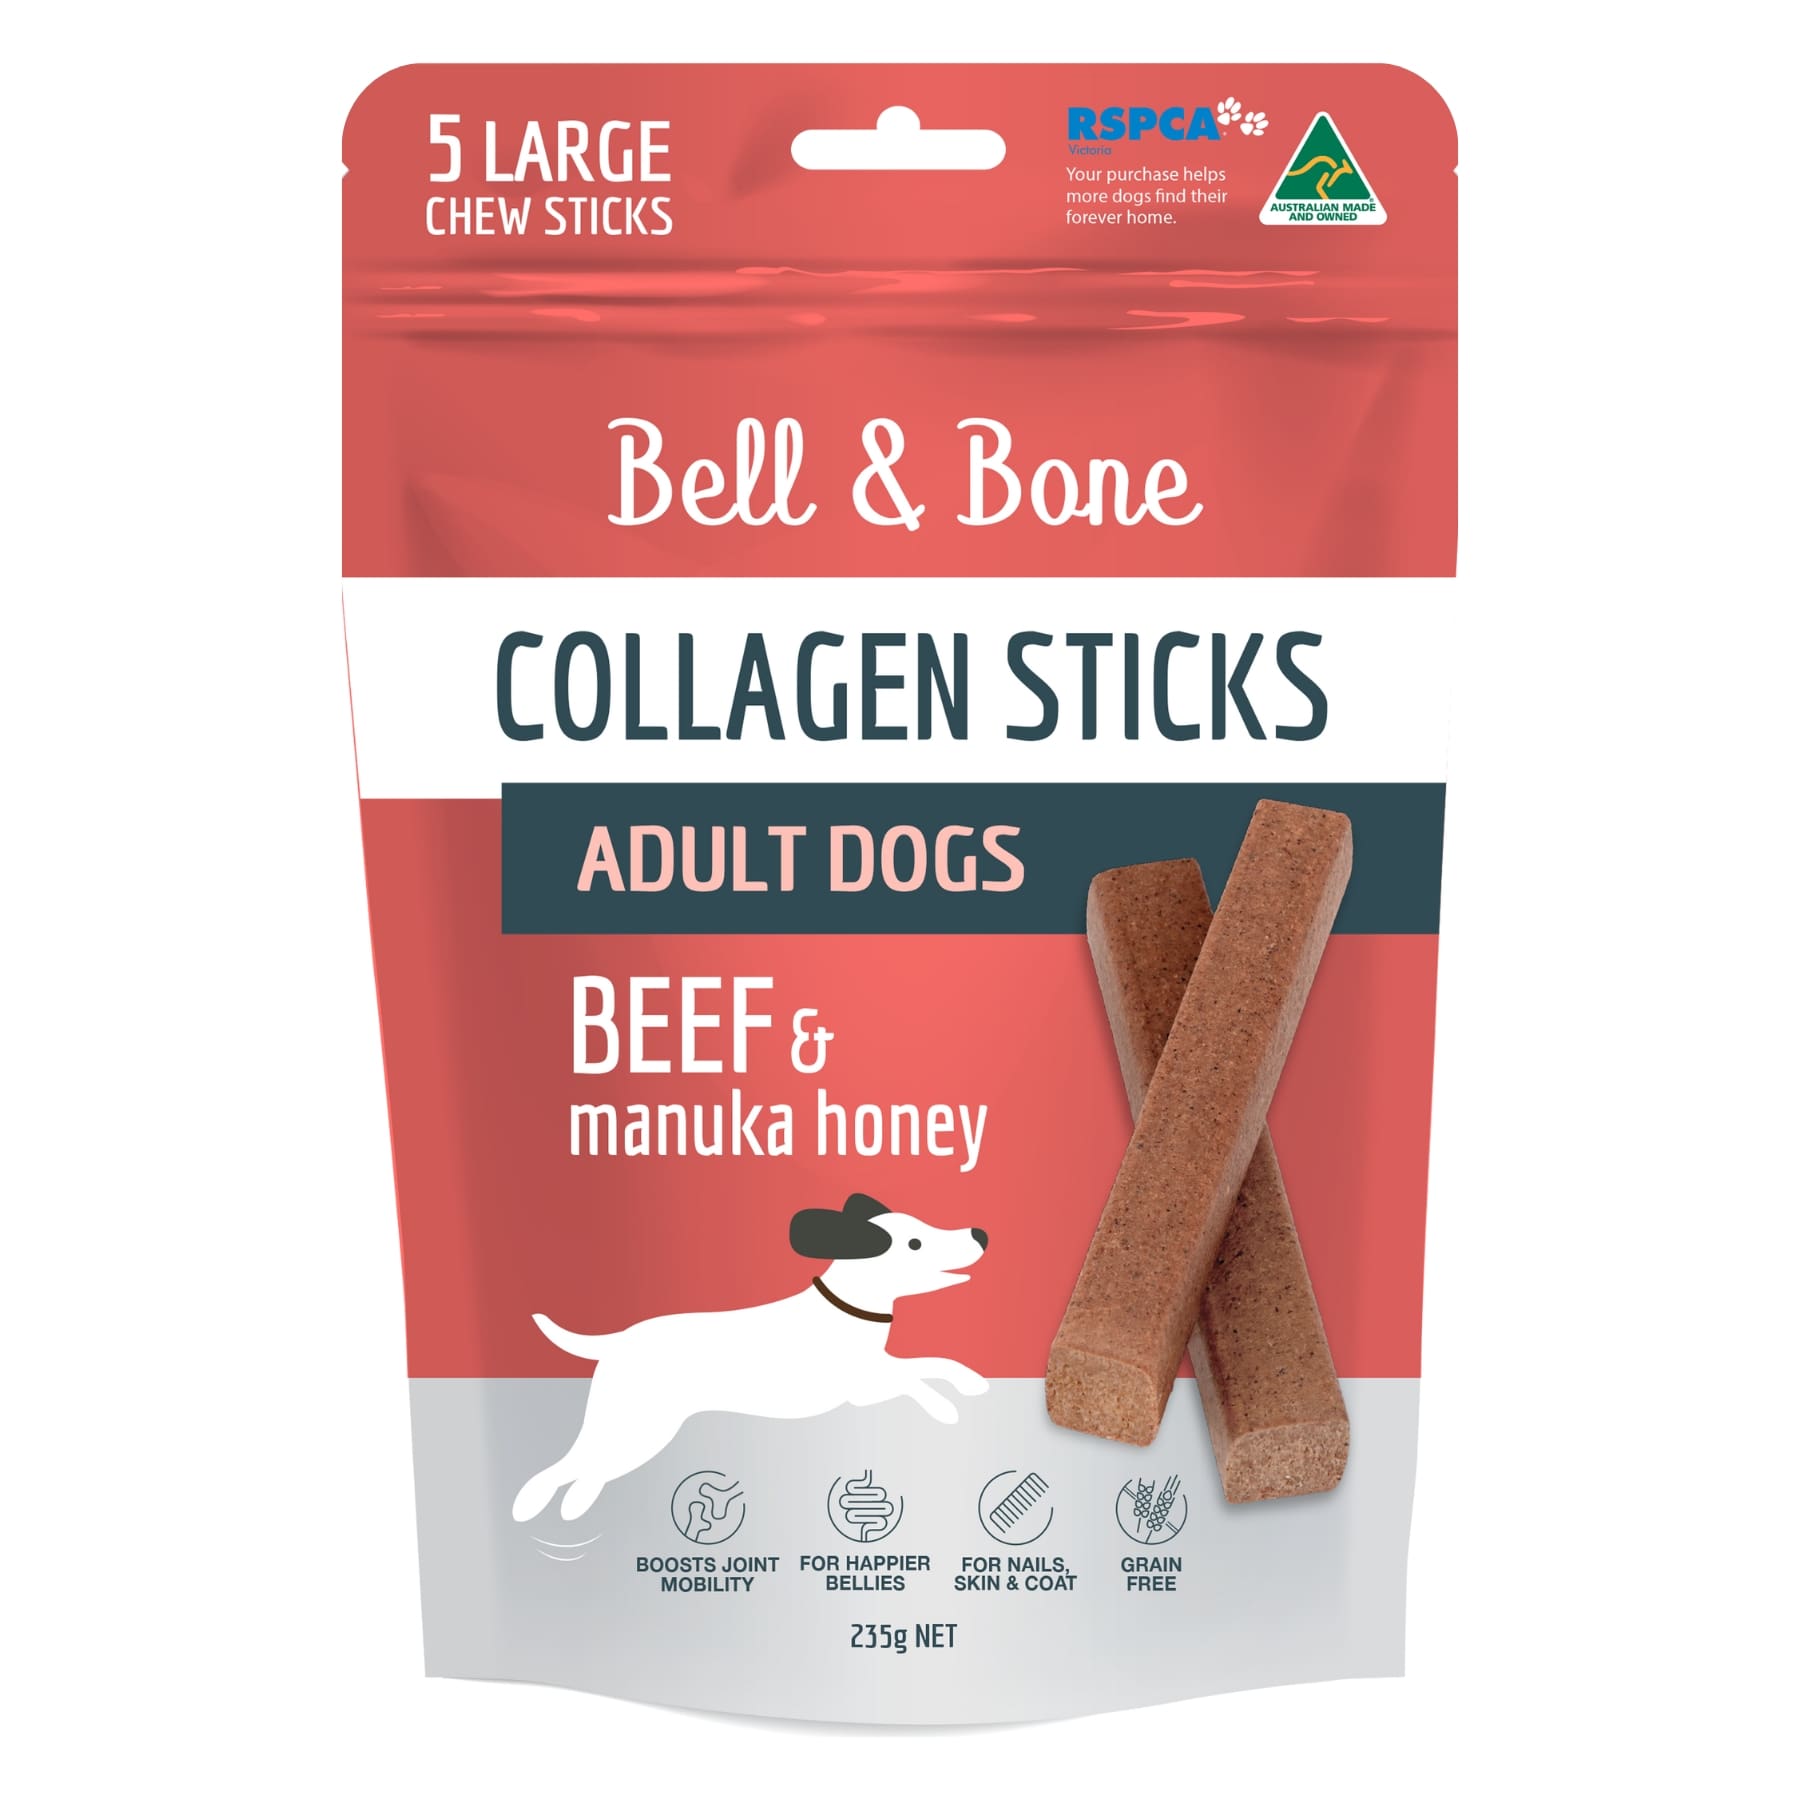 Bell & Bone Collagen Sticks Adult Dogs - Beef & Manuka Honey 235g